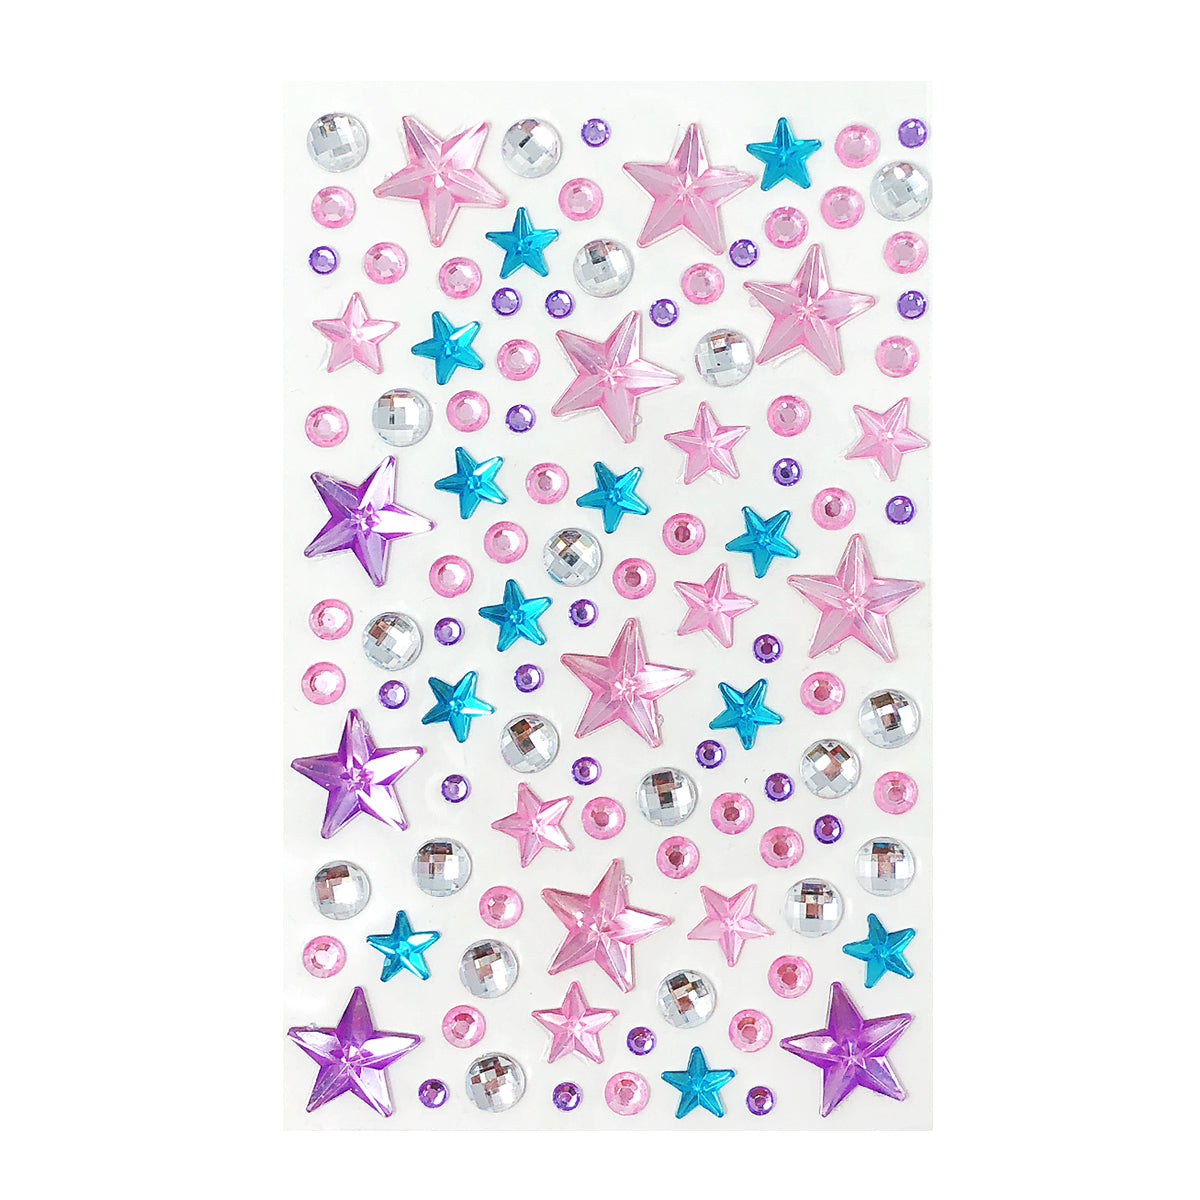 Wrapables Acrylic Self Adhesive Crystal Rhinestone Gem Stickers, Stars Pink Blue Lilac